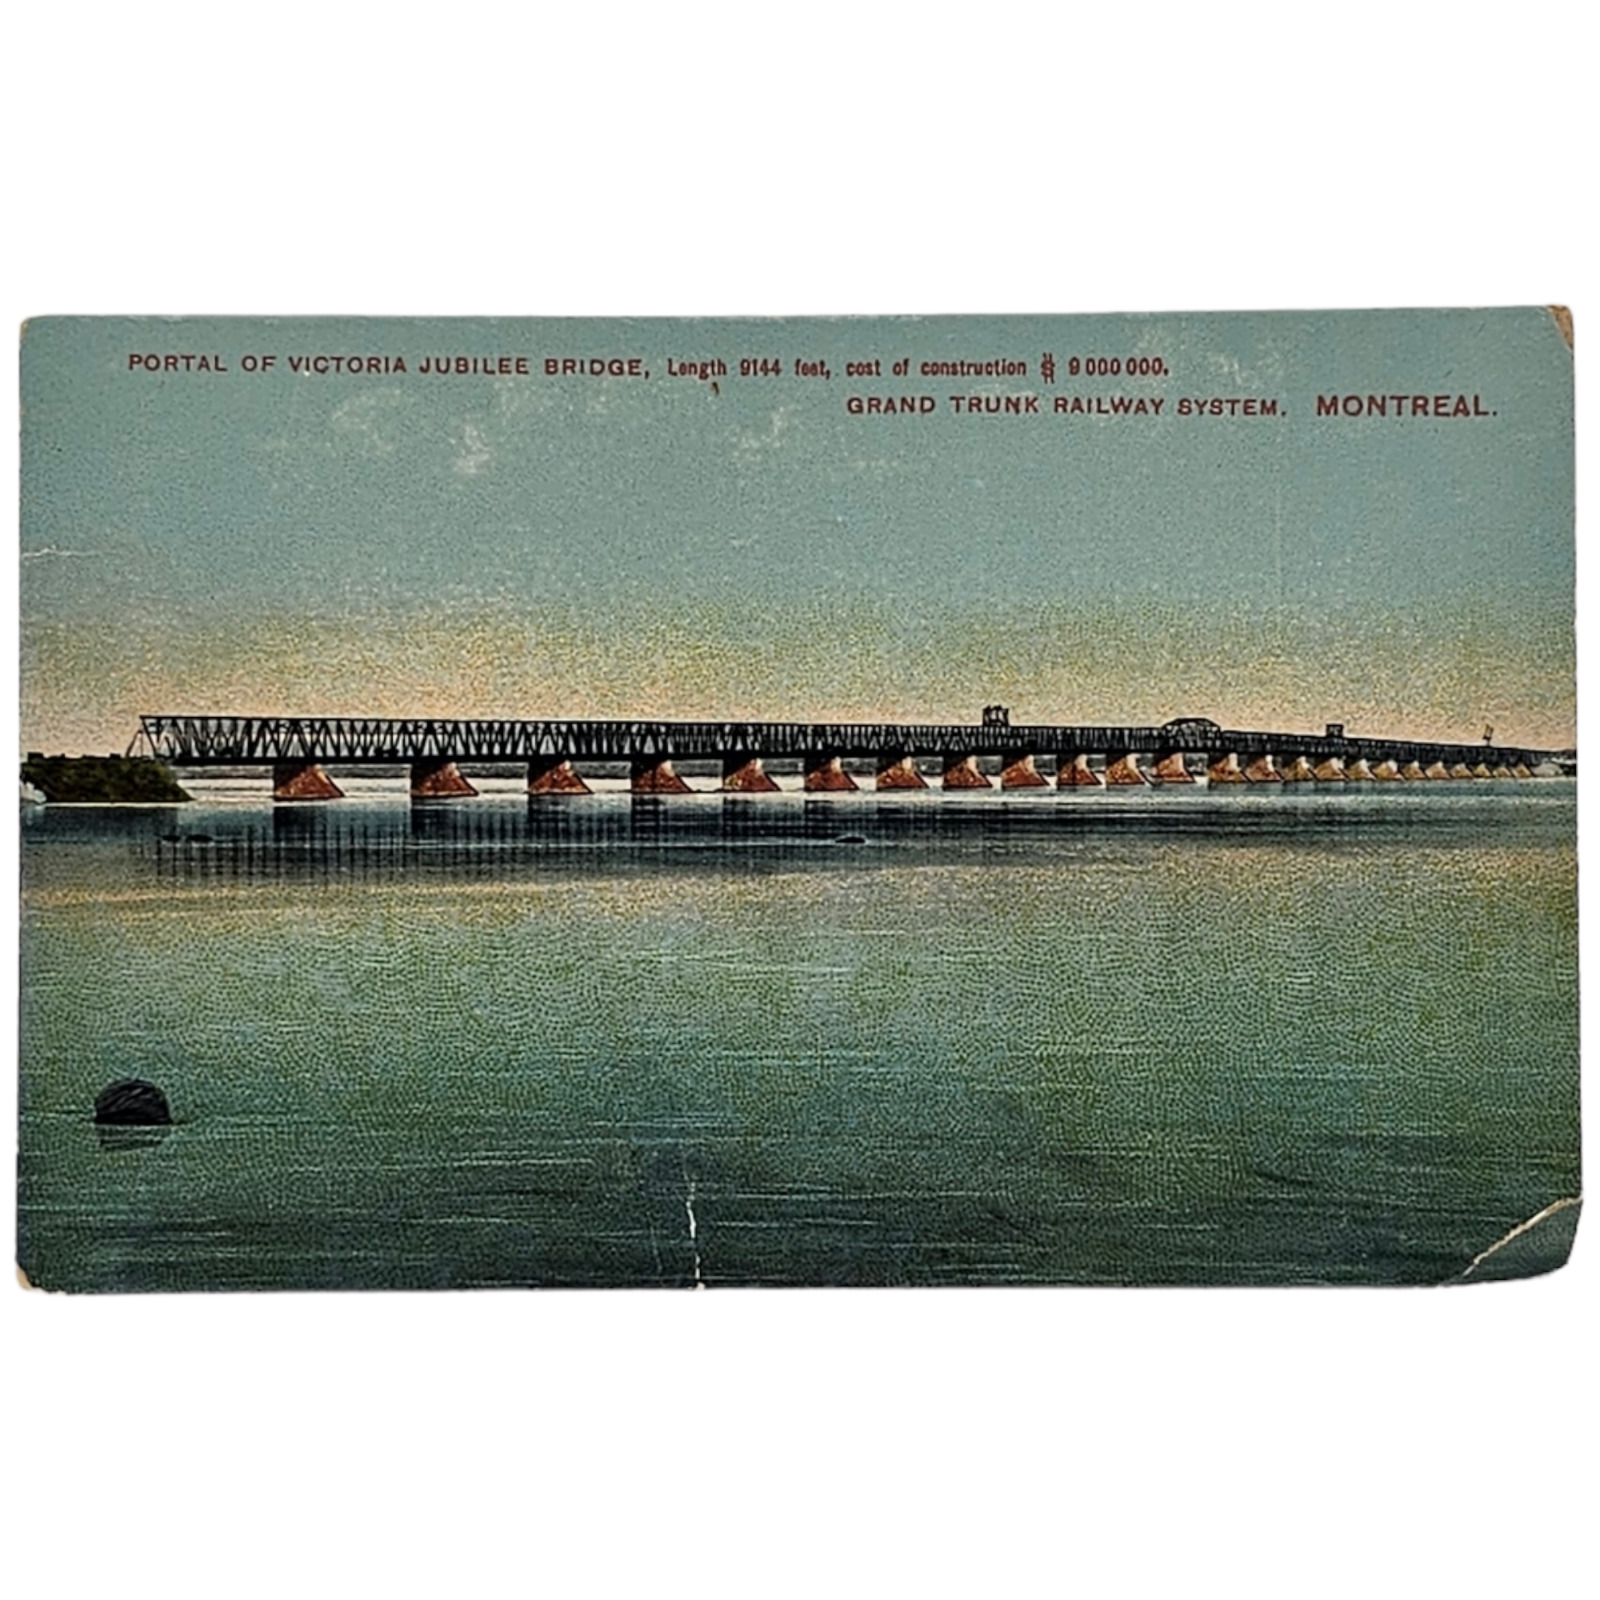 Portal of Victoria Jubilee Bridge Montreal Postcard Vintage Grand Trunk Railway